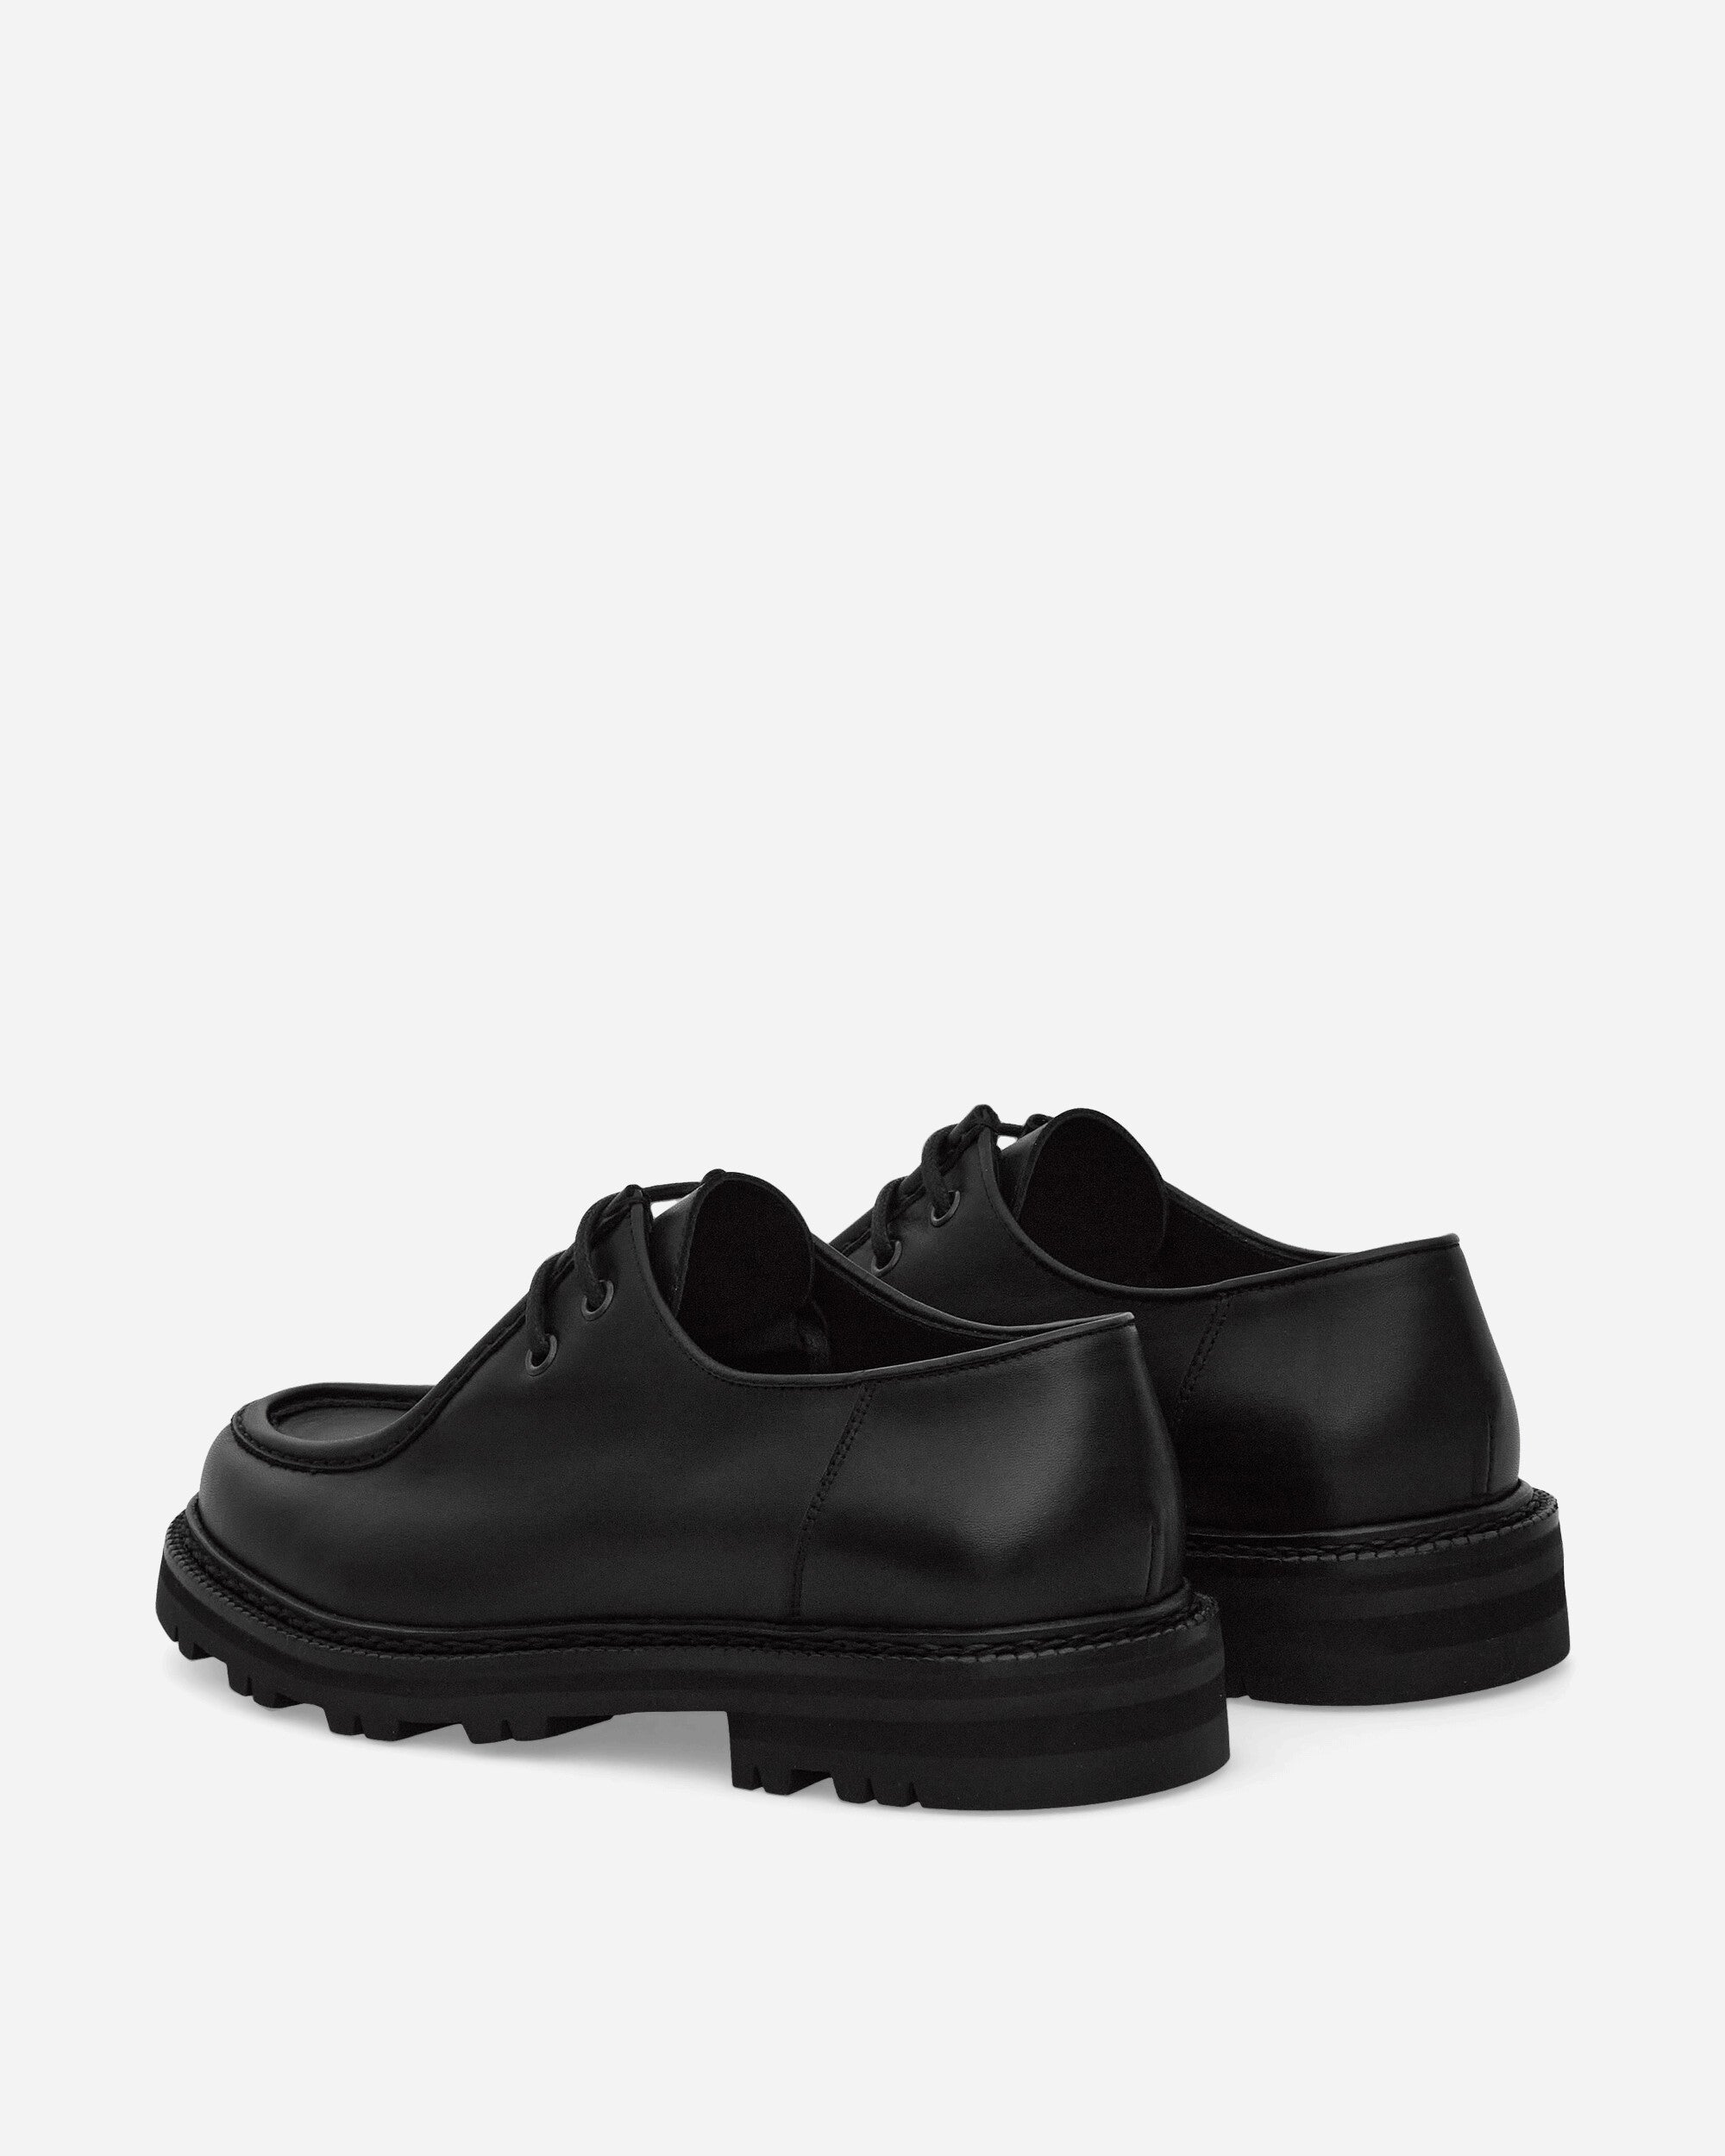 Bode University Shoes Black Classic Shoes Laced Up MRFW000035 1